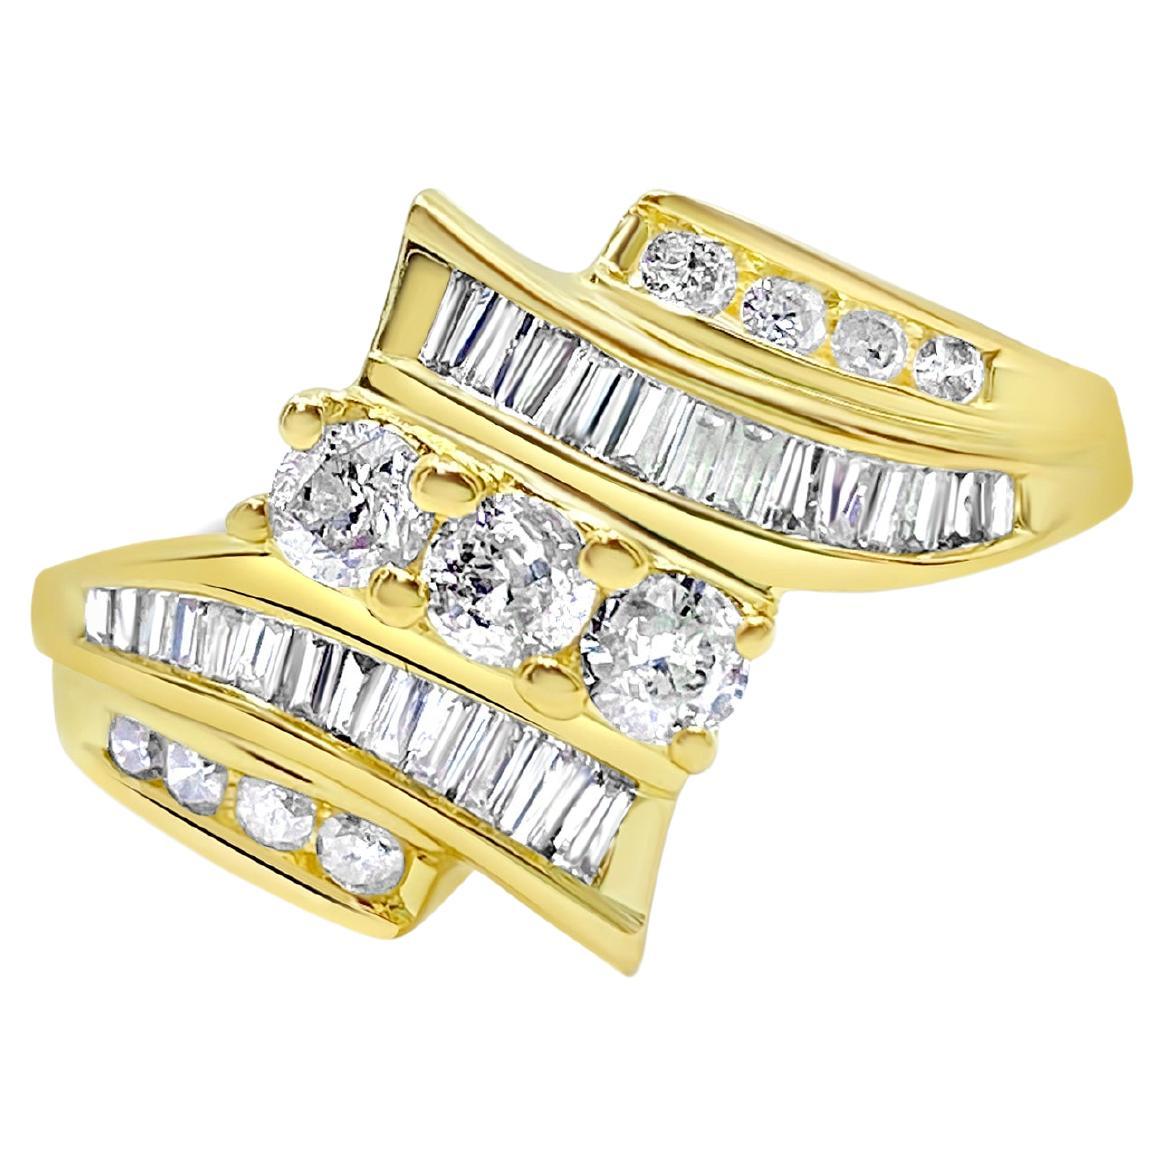 1.78 Carat Diamond Cluster Engagement Ring 